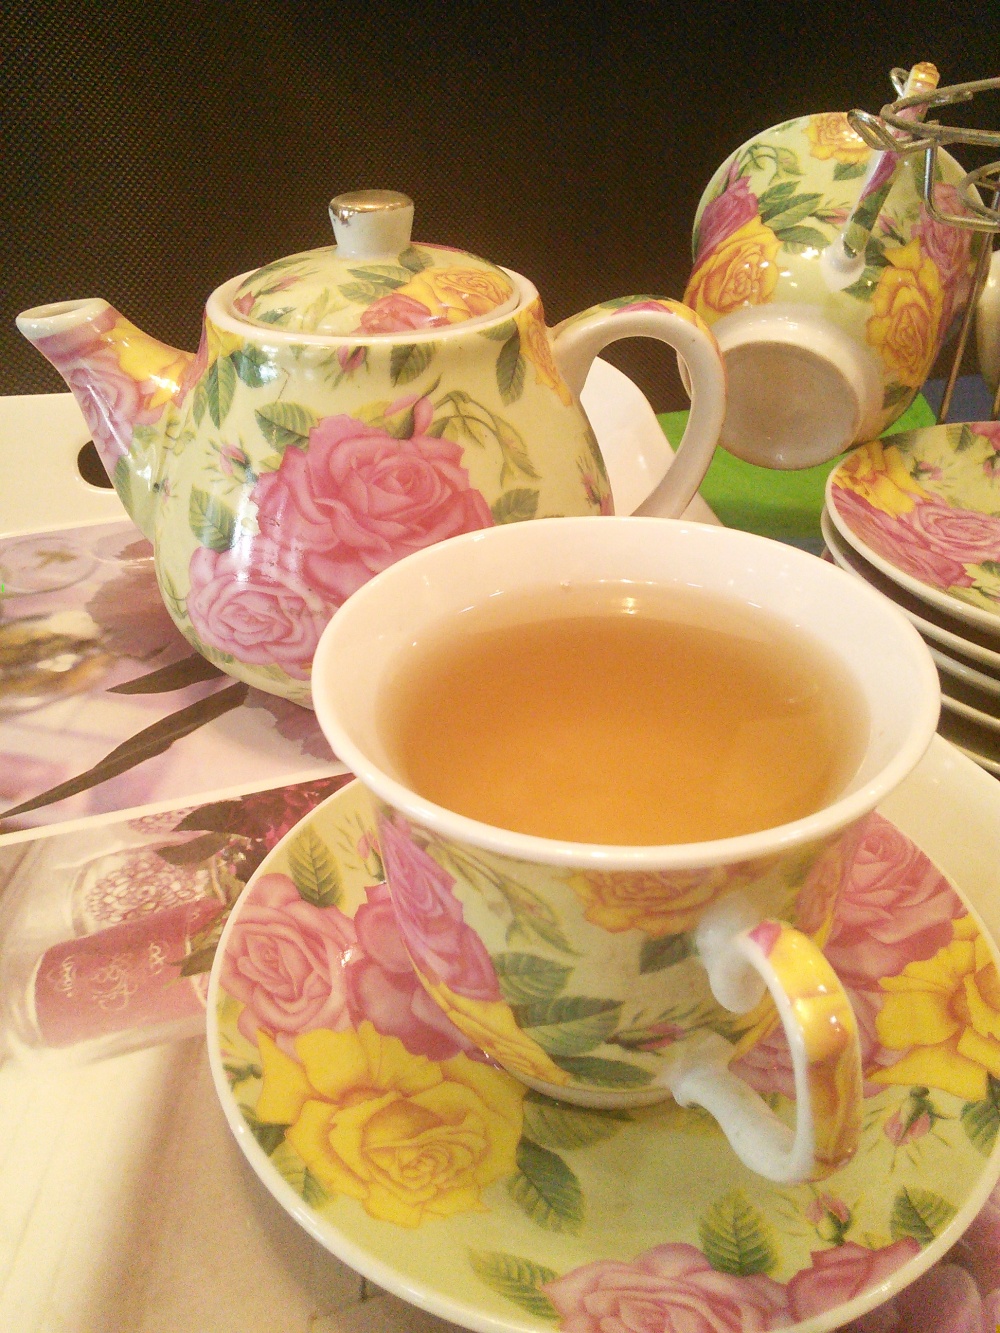 Tea is liquid peace, comfort, goodness and joy.